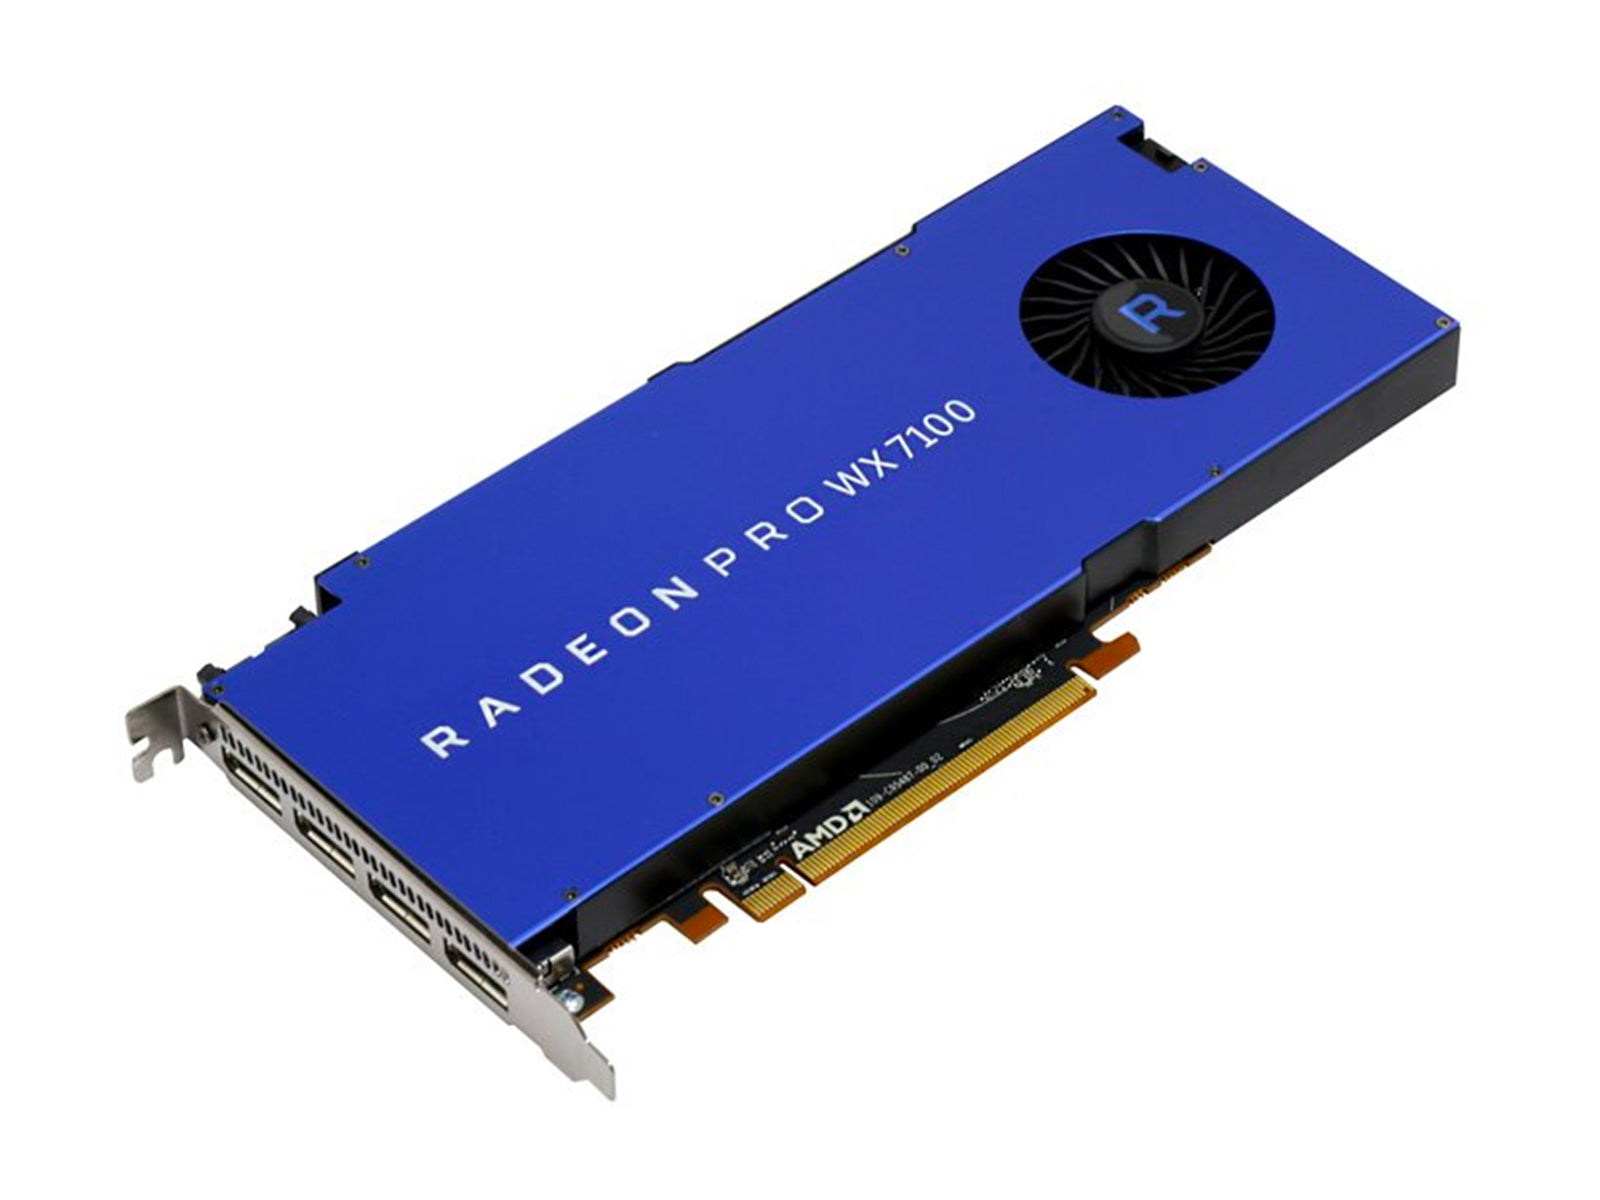 AMD Radeon Pro WX 7100 8GB Graphics Card Monitors.com 